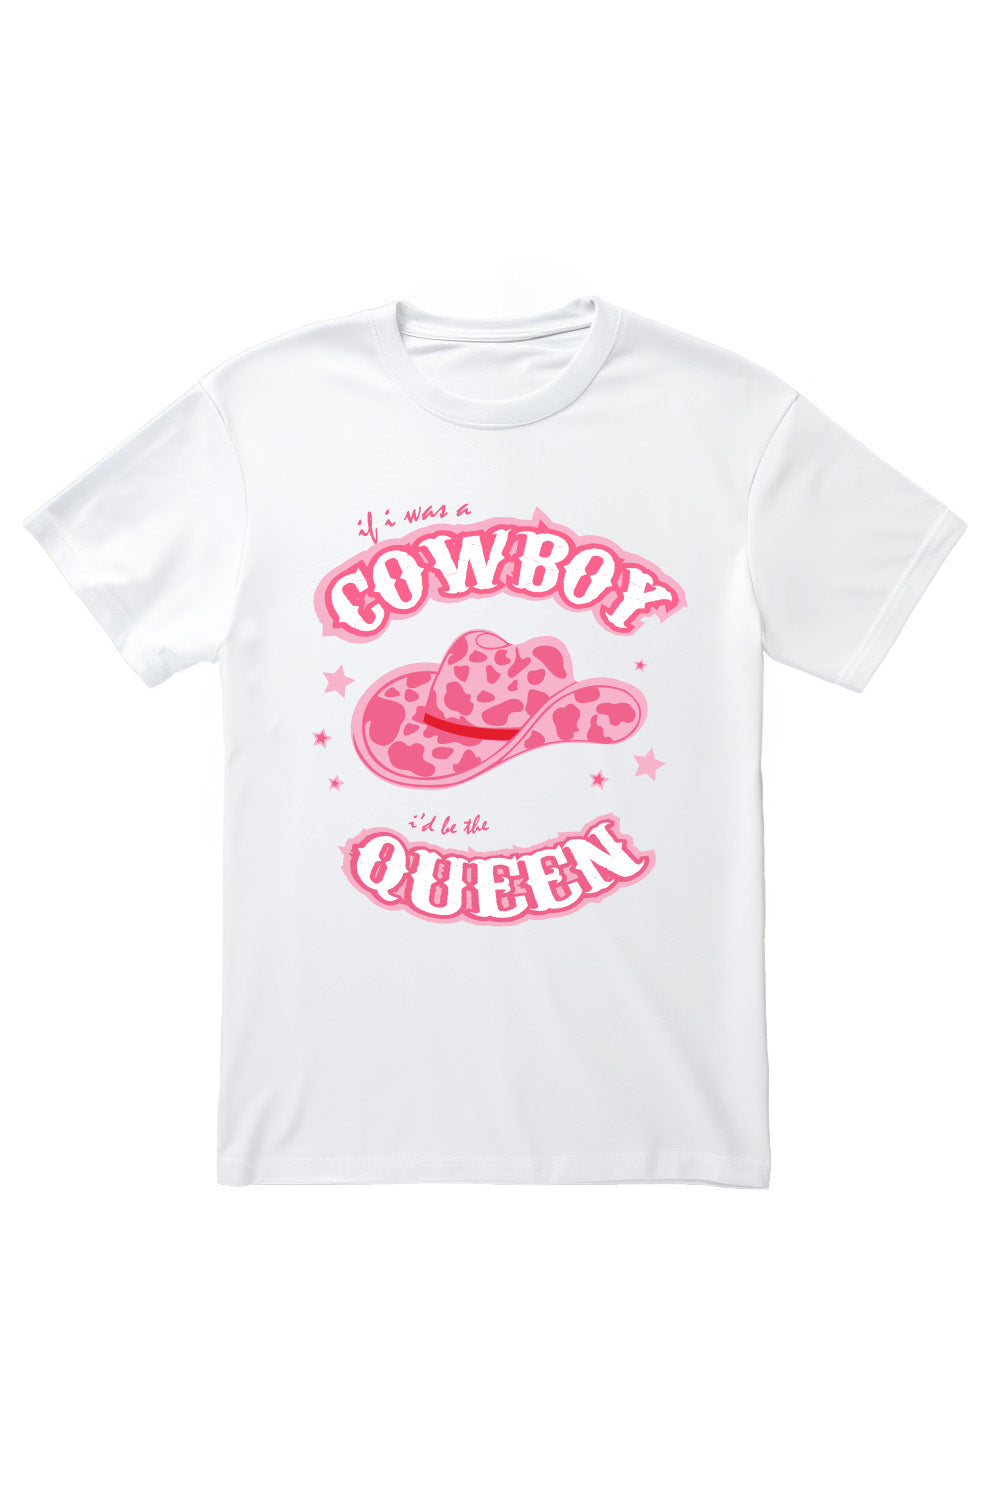 Cowboy Queen T-Shirt in White (Custom Packs)